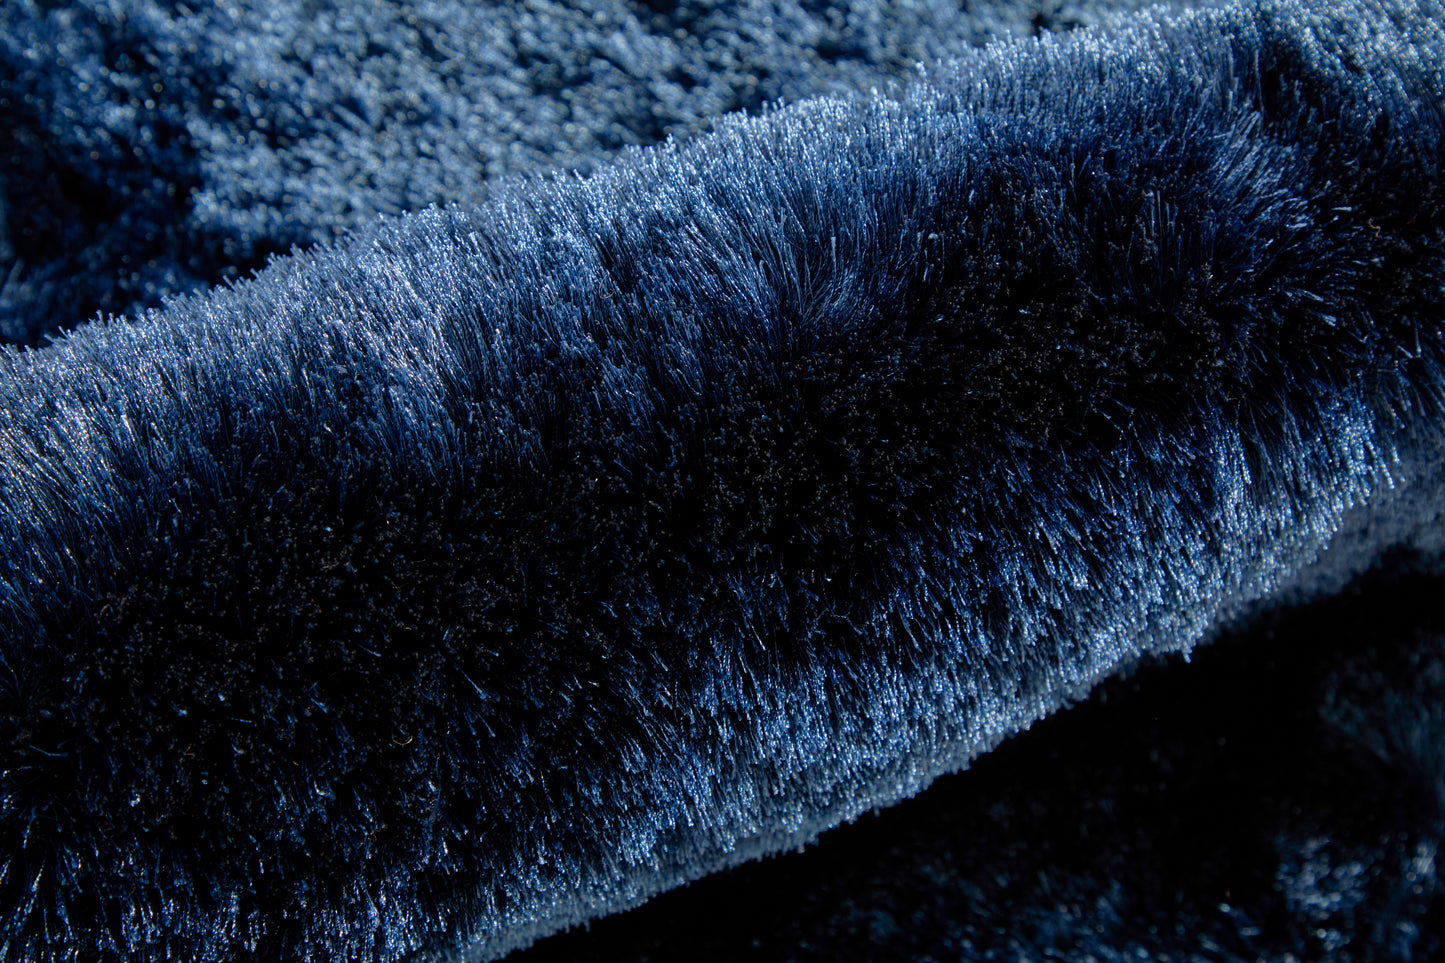 Feizy Indochine 4550F Dark Blue  Transitional Hand Tufted Rug